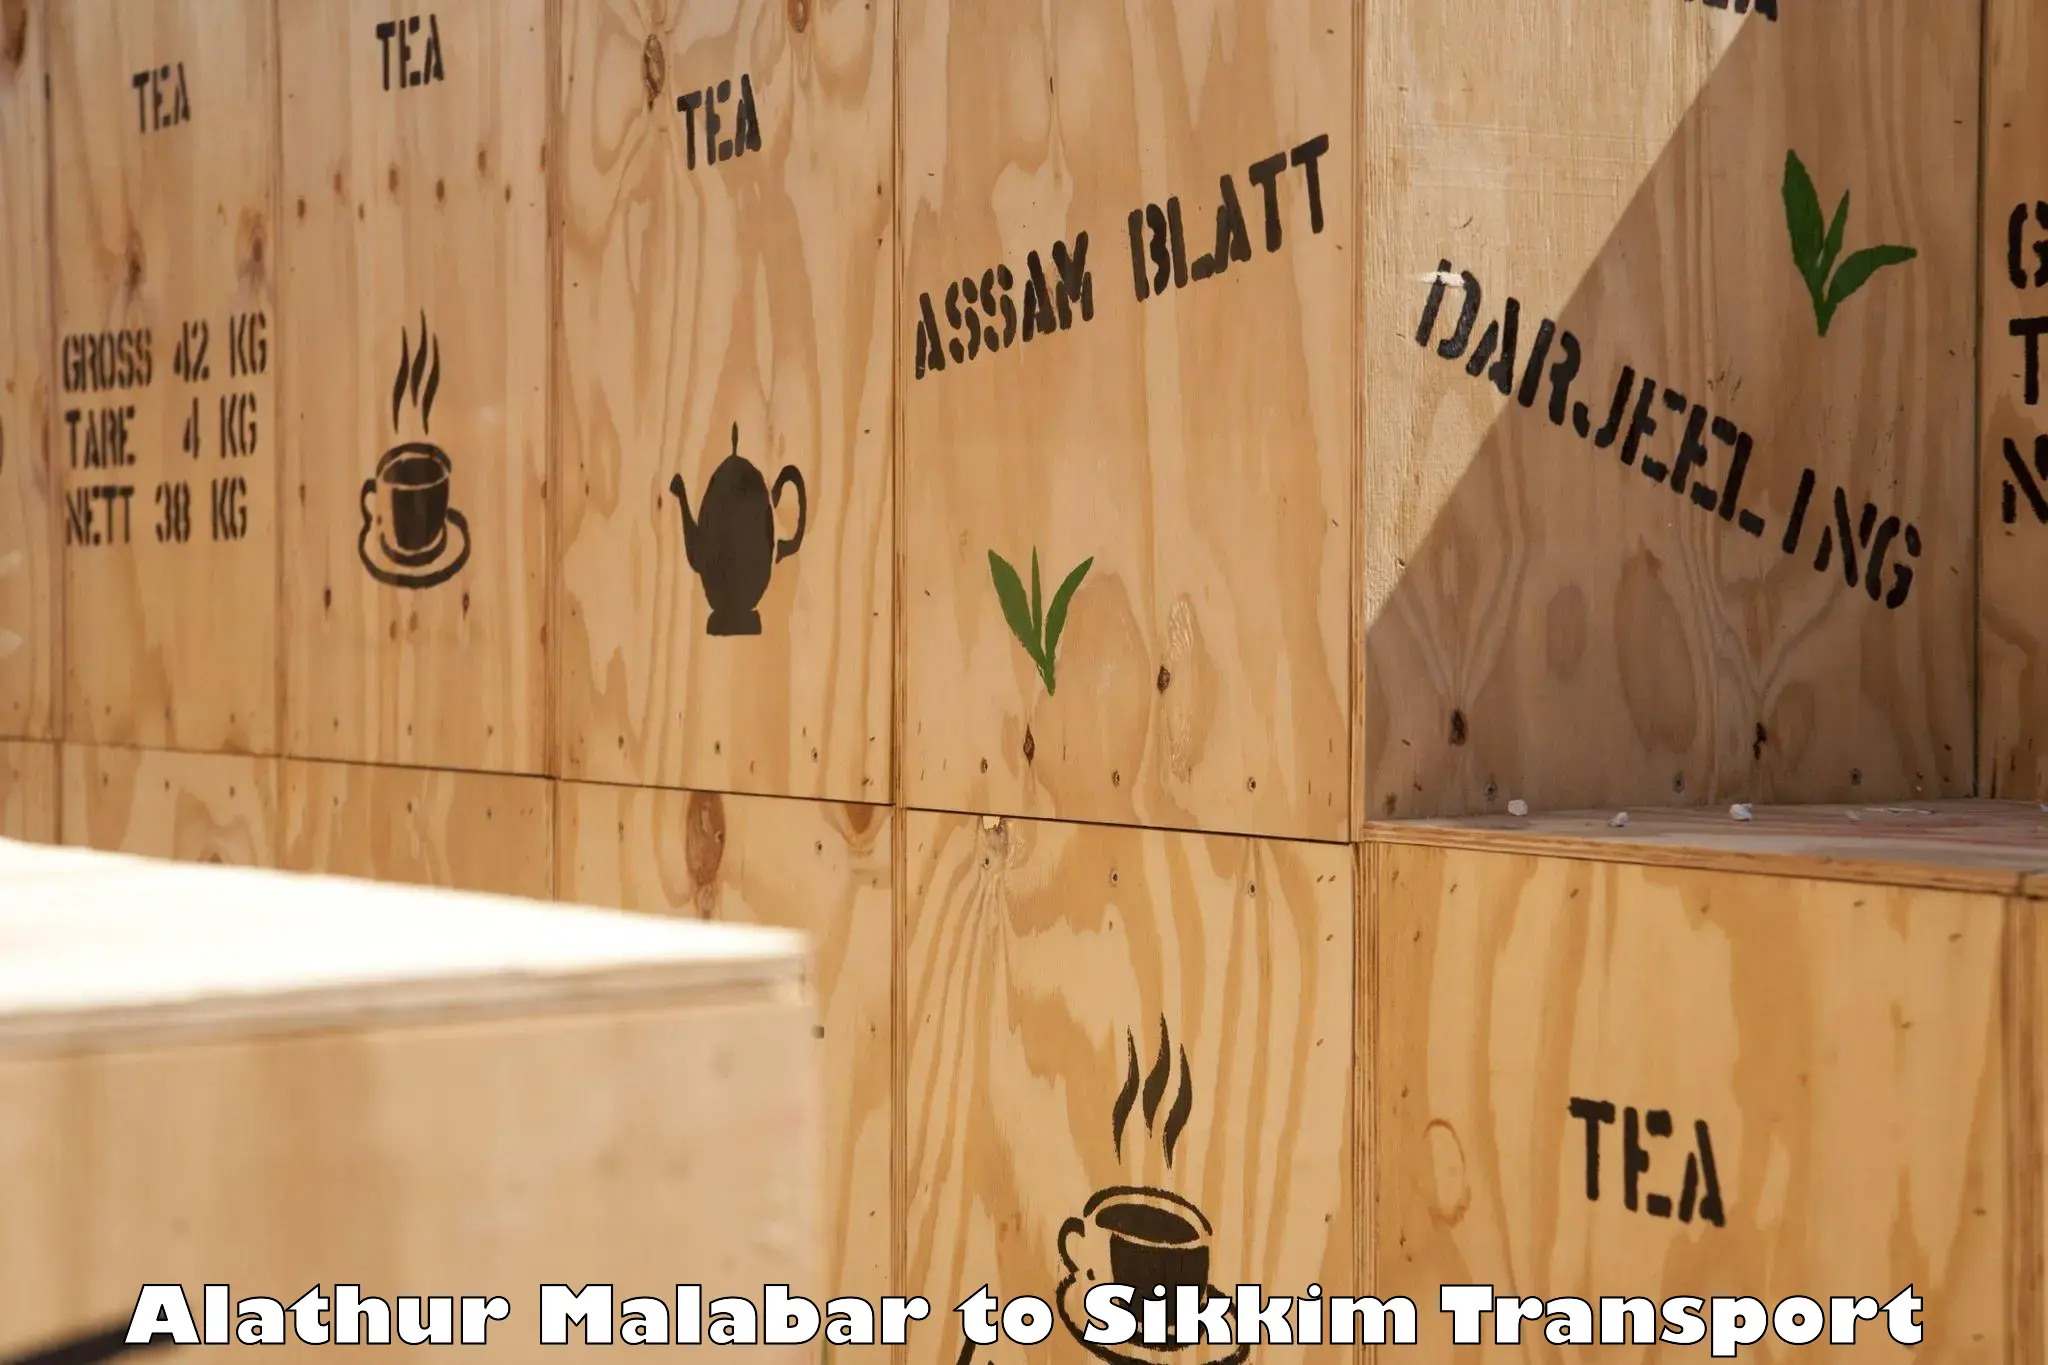 Delivery service Alathur Malabar to Mangan